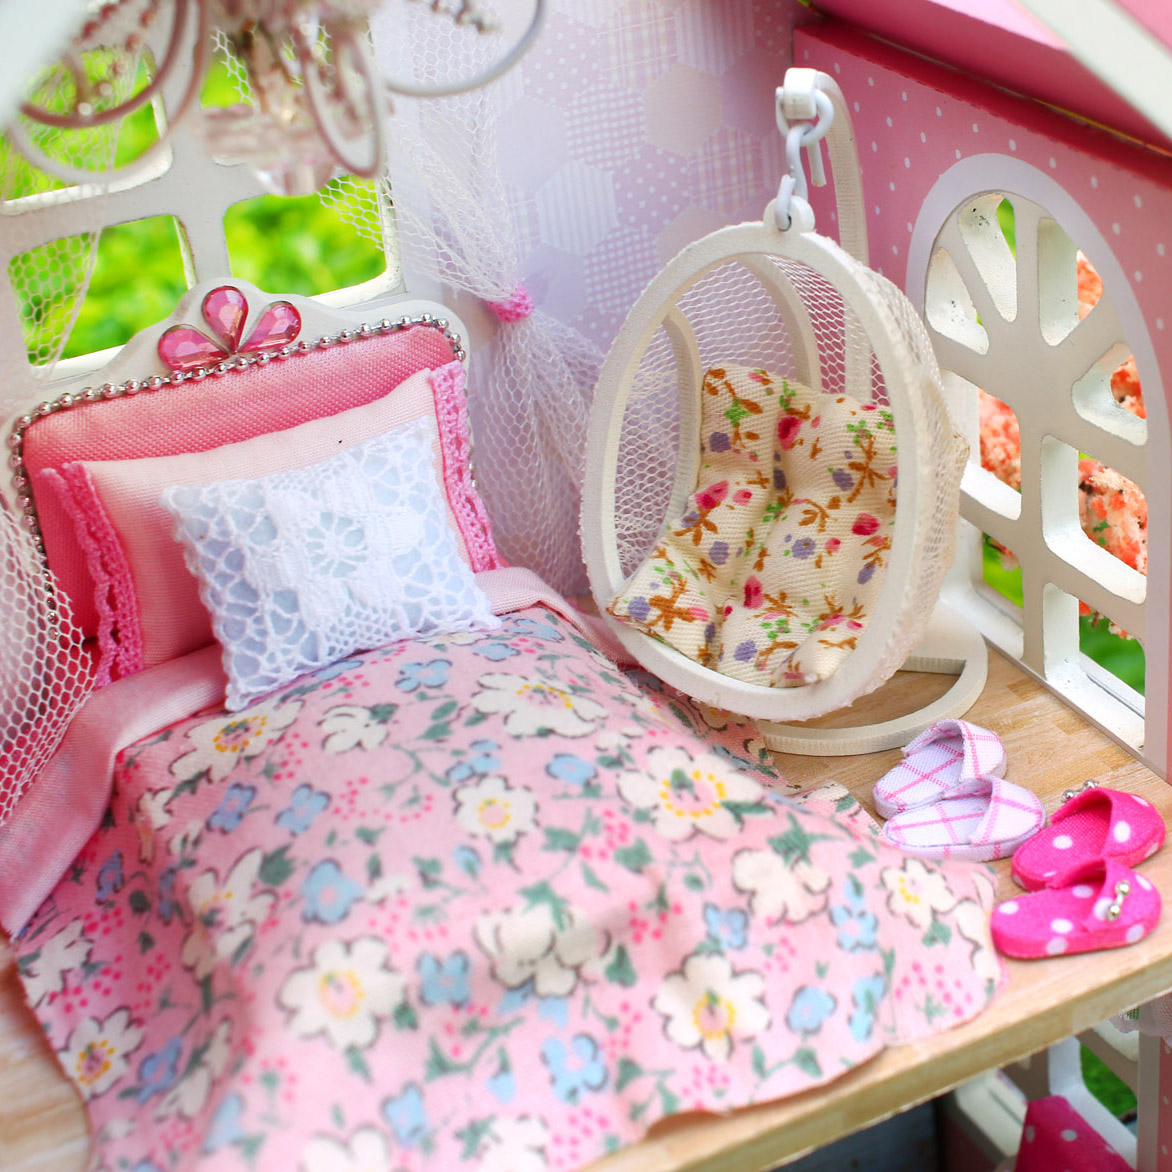 Cuteroom-124-DIY-Wooden-Dollhouse-Pink-Cherry-Handmade-Decorations-Model-with-LED-LightMusic-Birthda-1068341-9